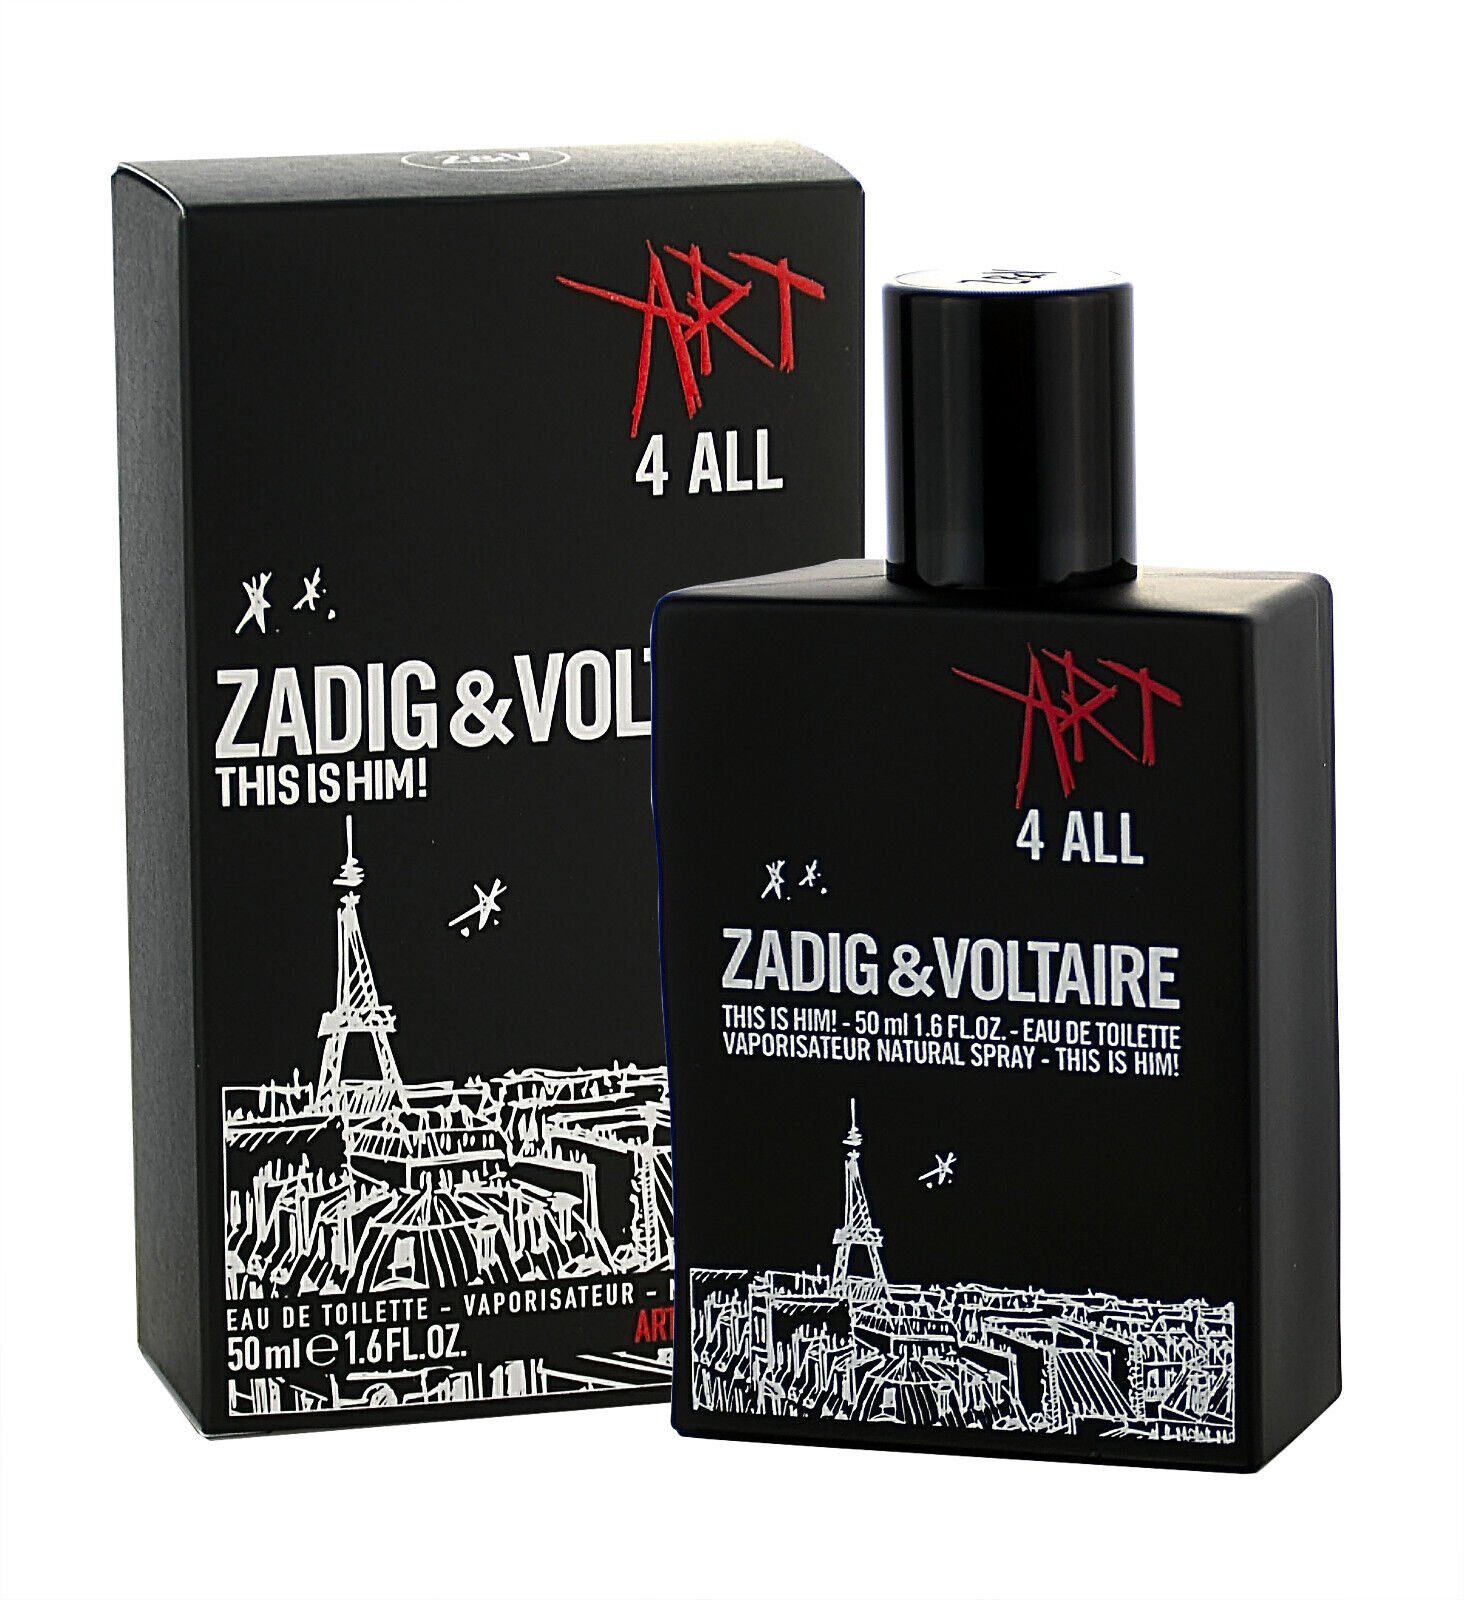 ZADIG & VOLTAIRE Eau de & All Art Toilette Edition 50ml EDT Voltaire Zadig is This Him! 4 Limited